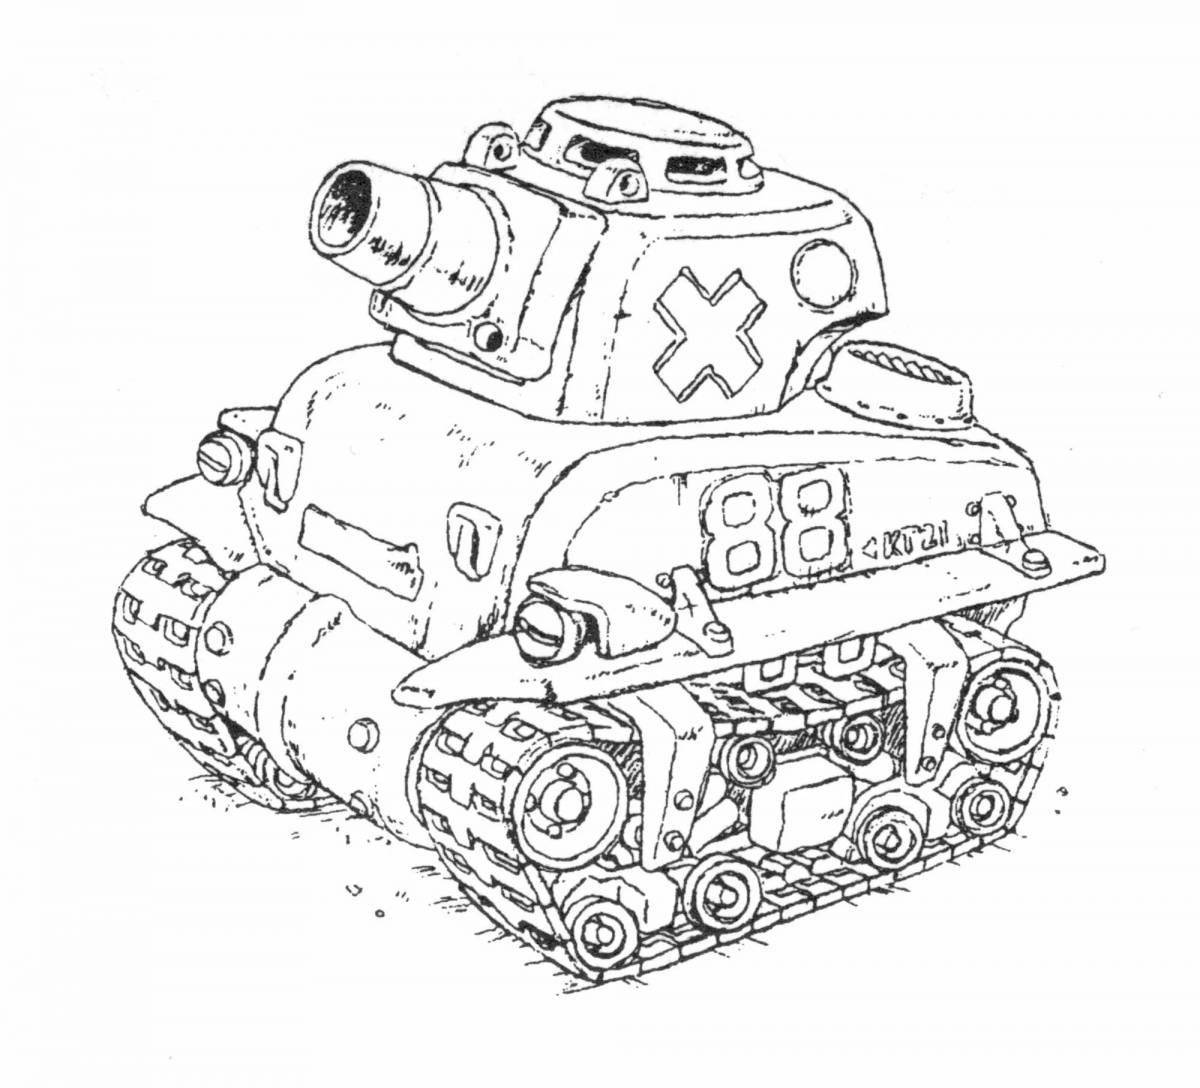 Impressive k44 tank coloring page